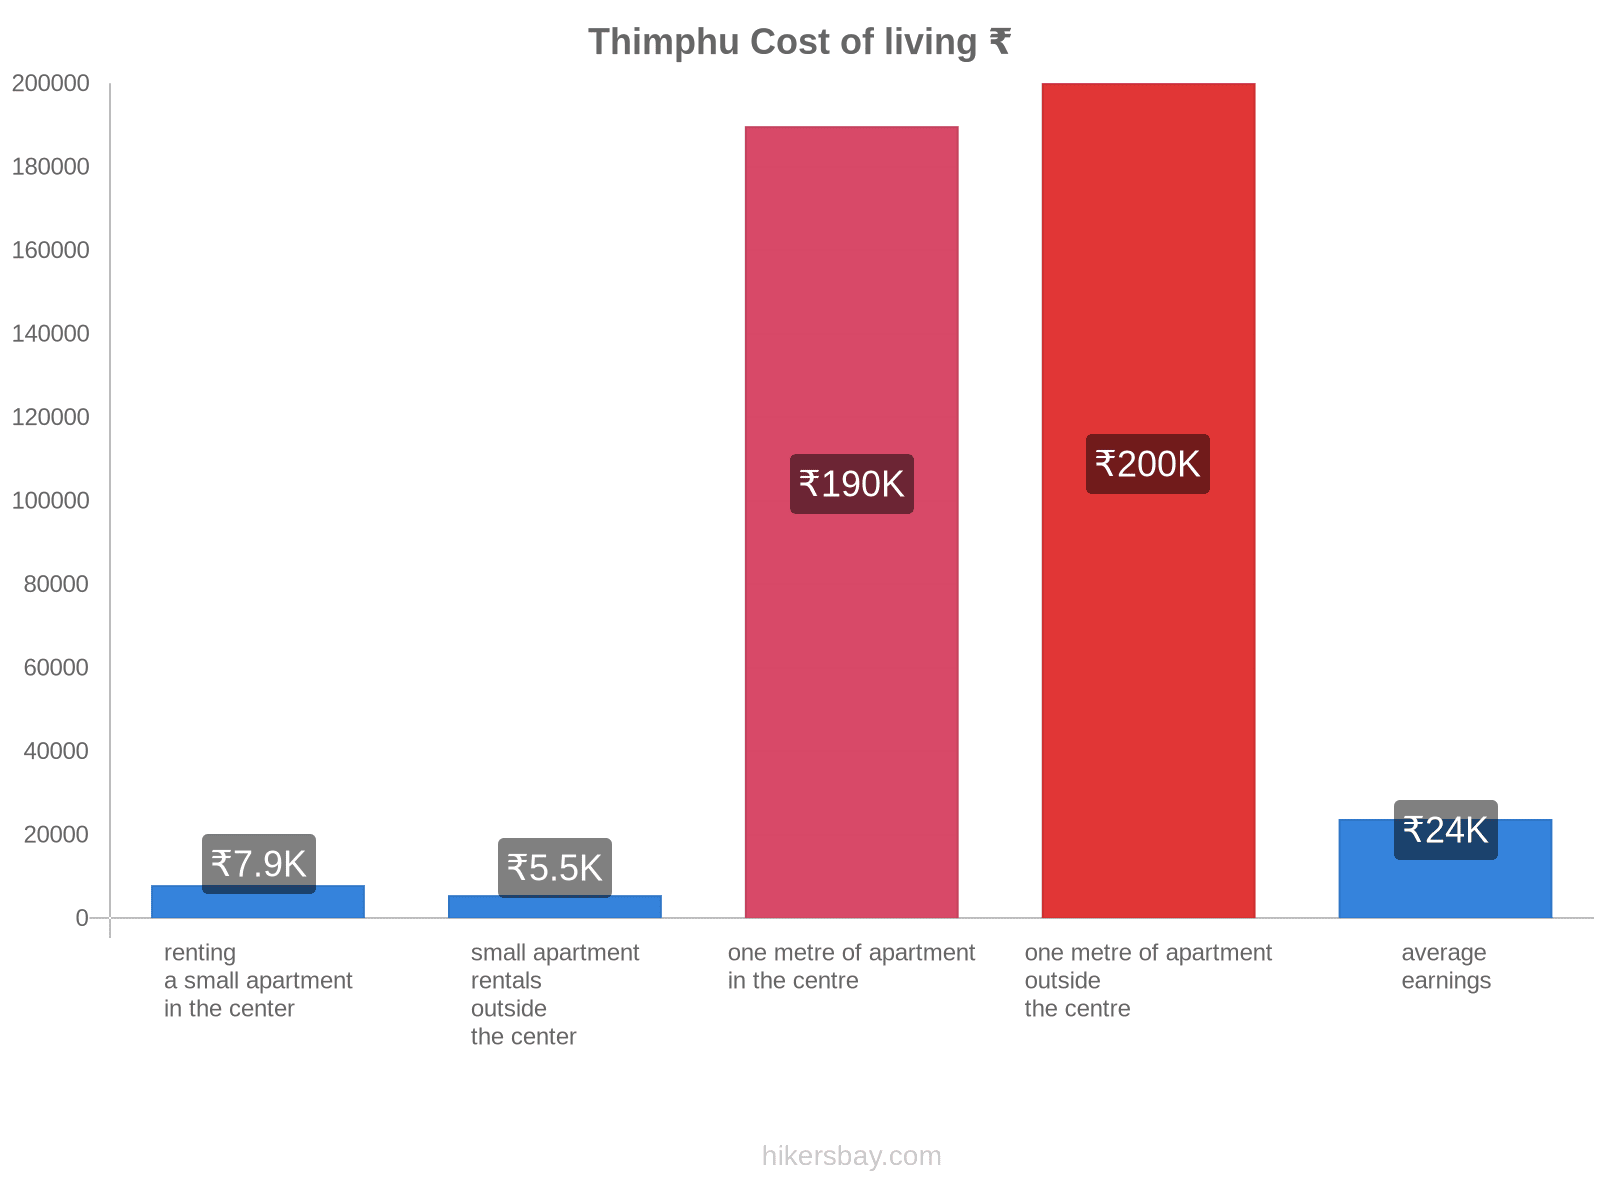 Thimphu cost of living hikersbay.com